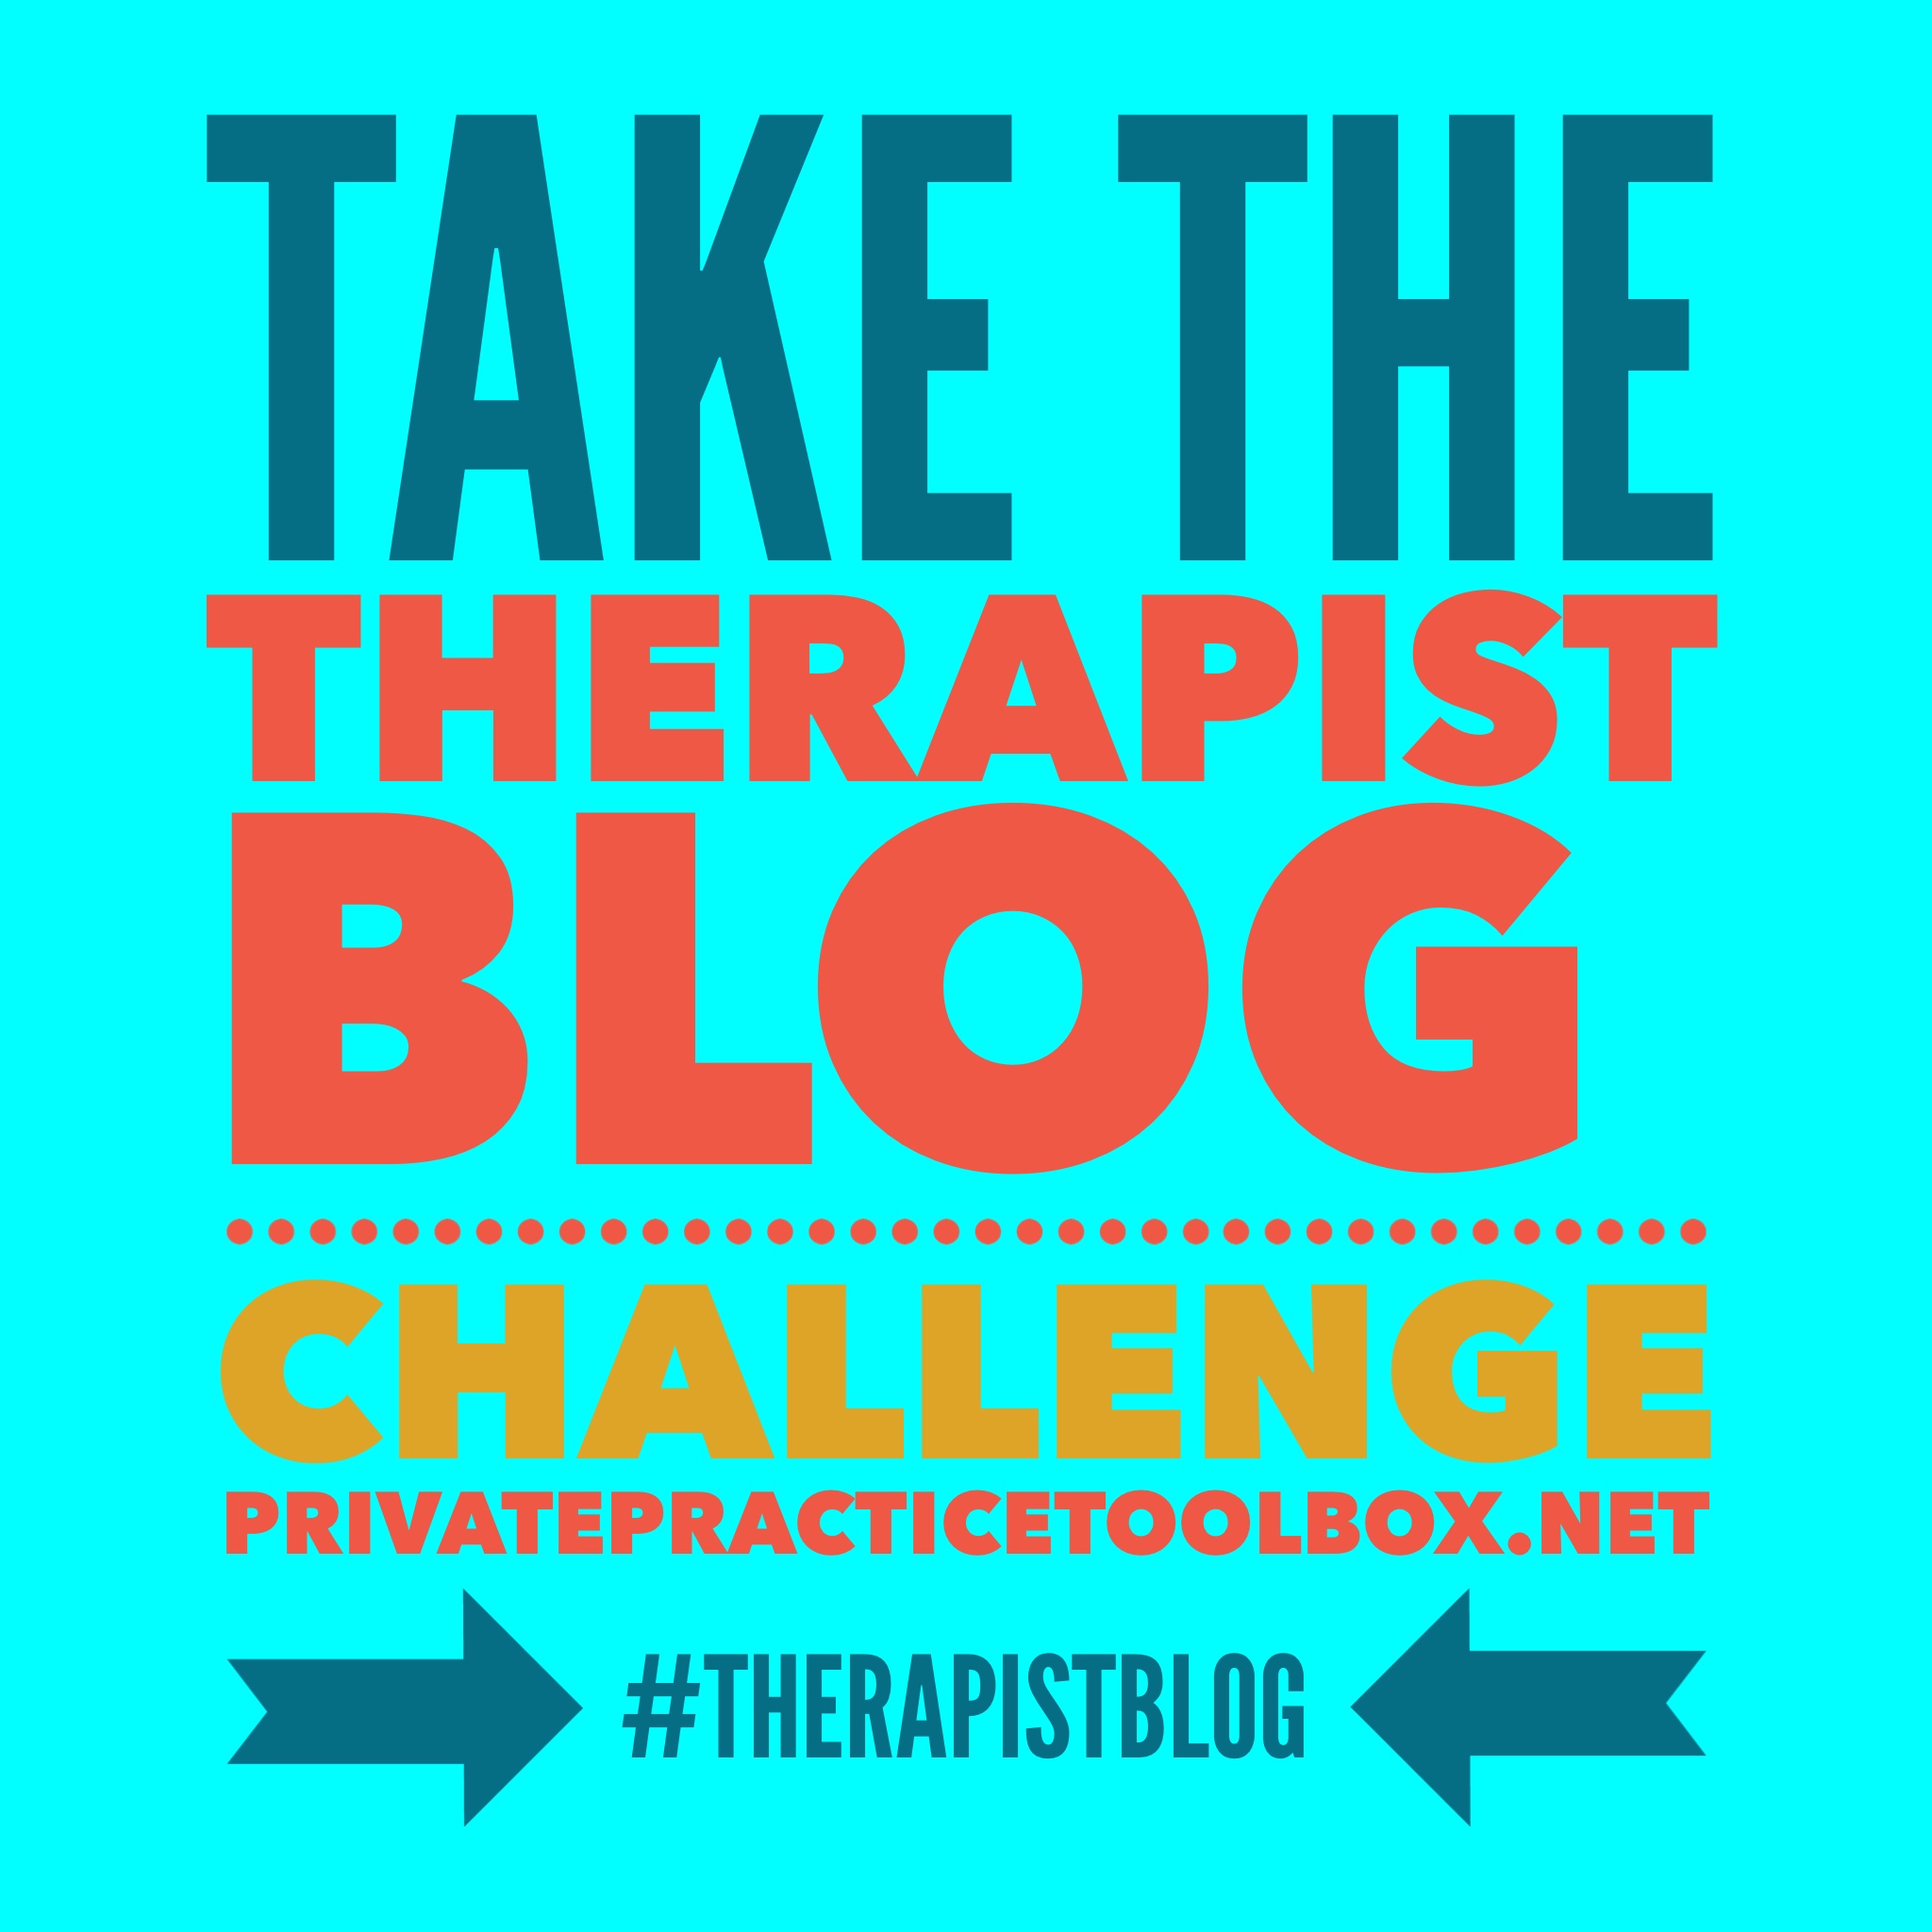 Therapist Blog Challenge